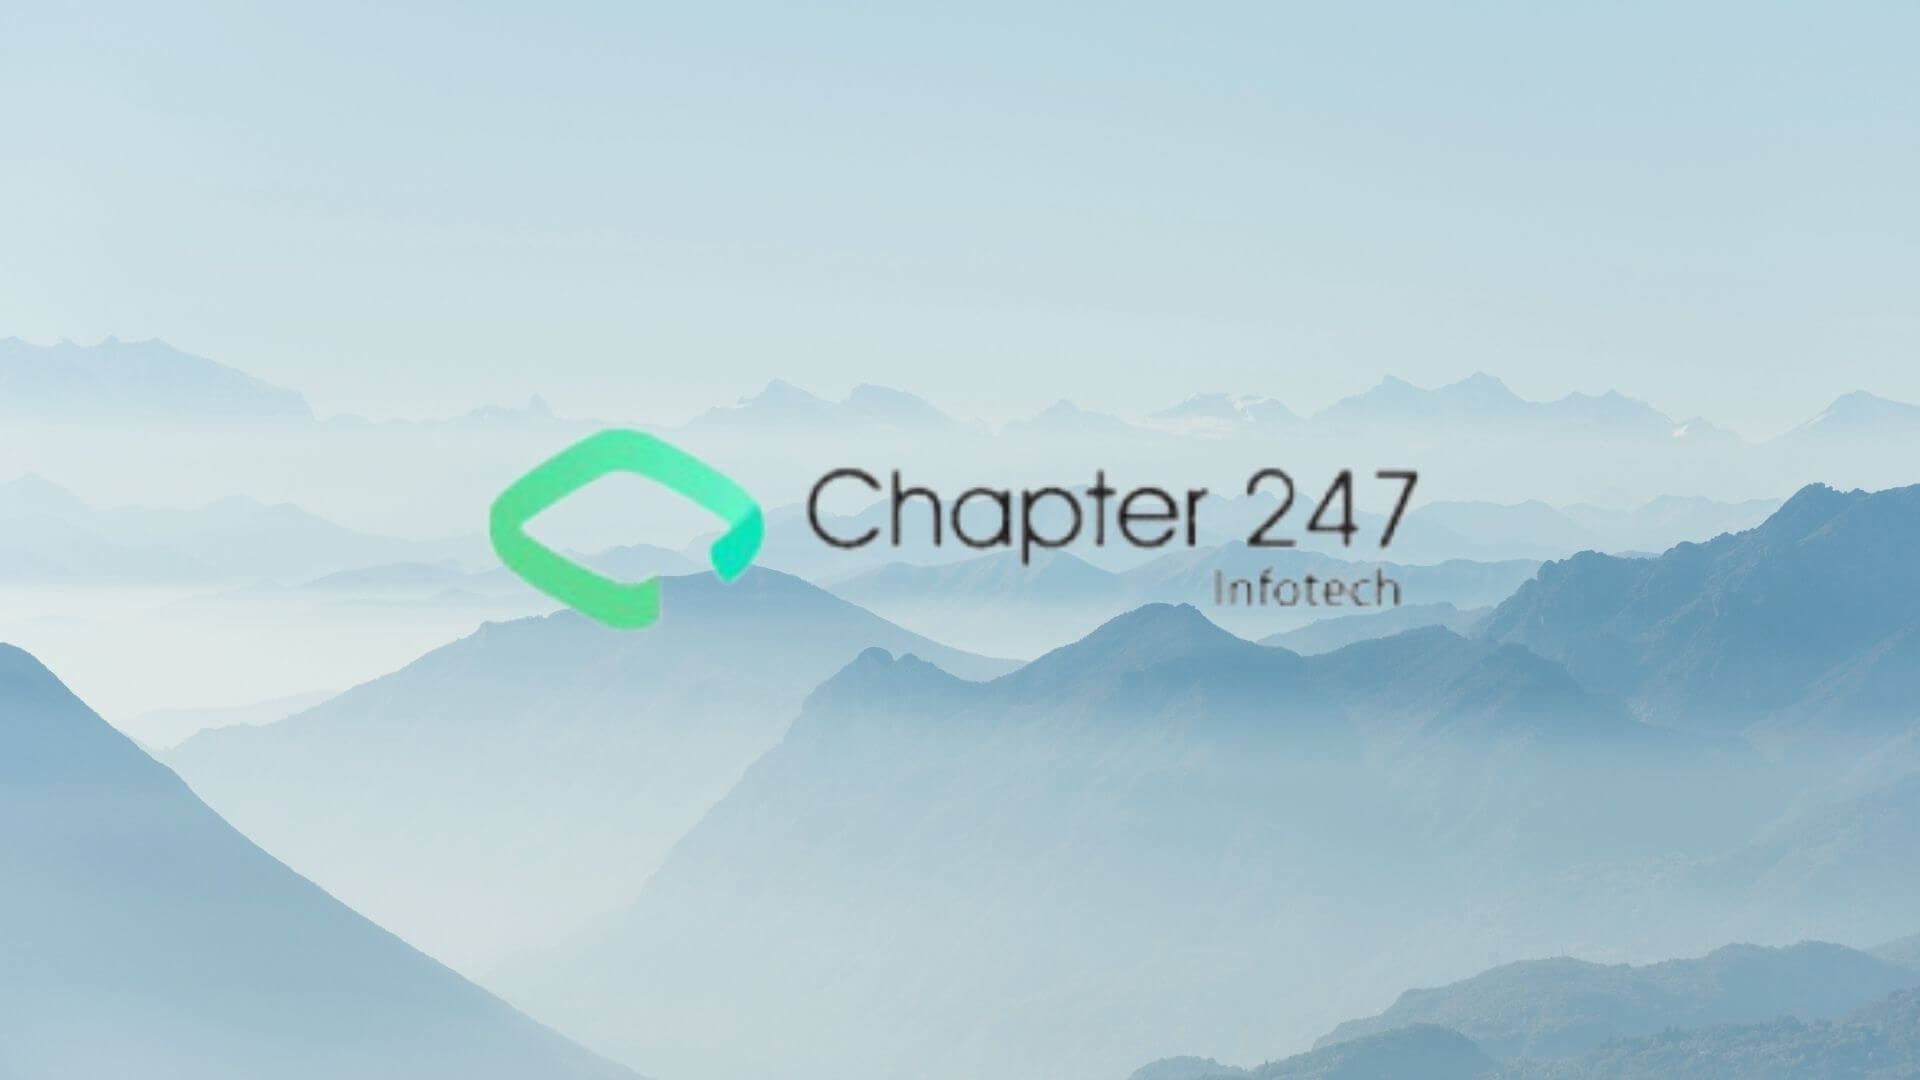 Chapter247 logo